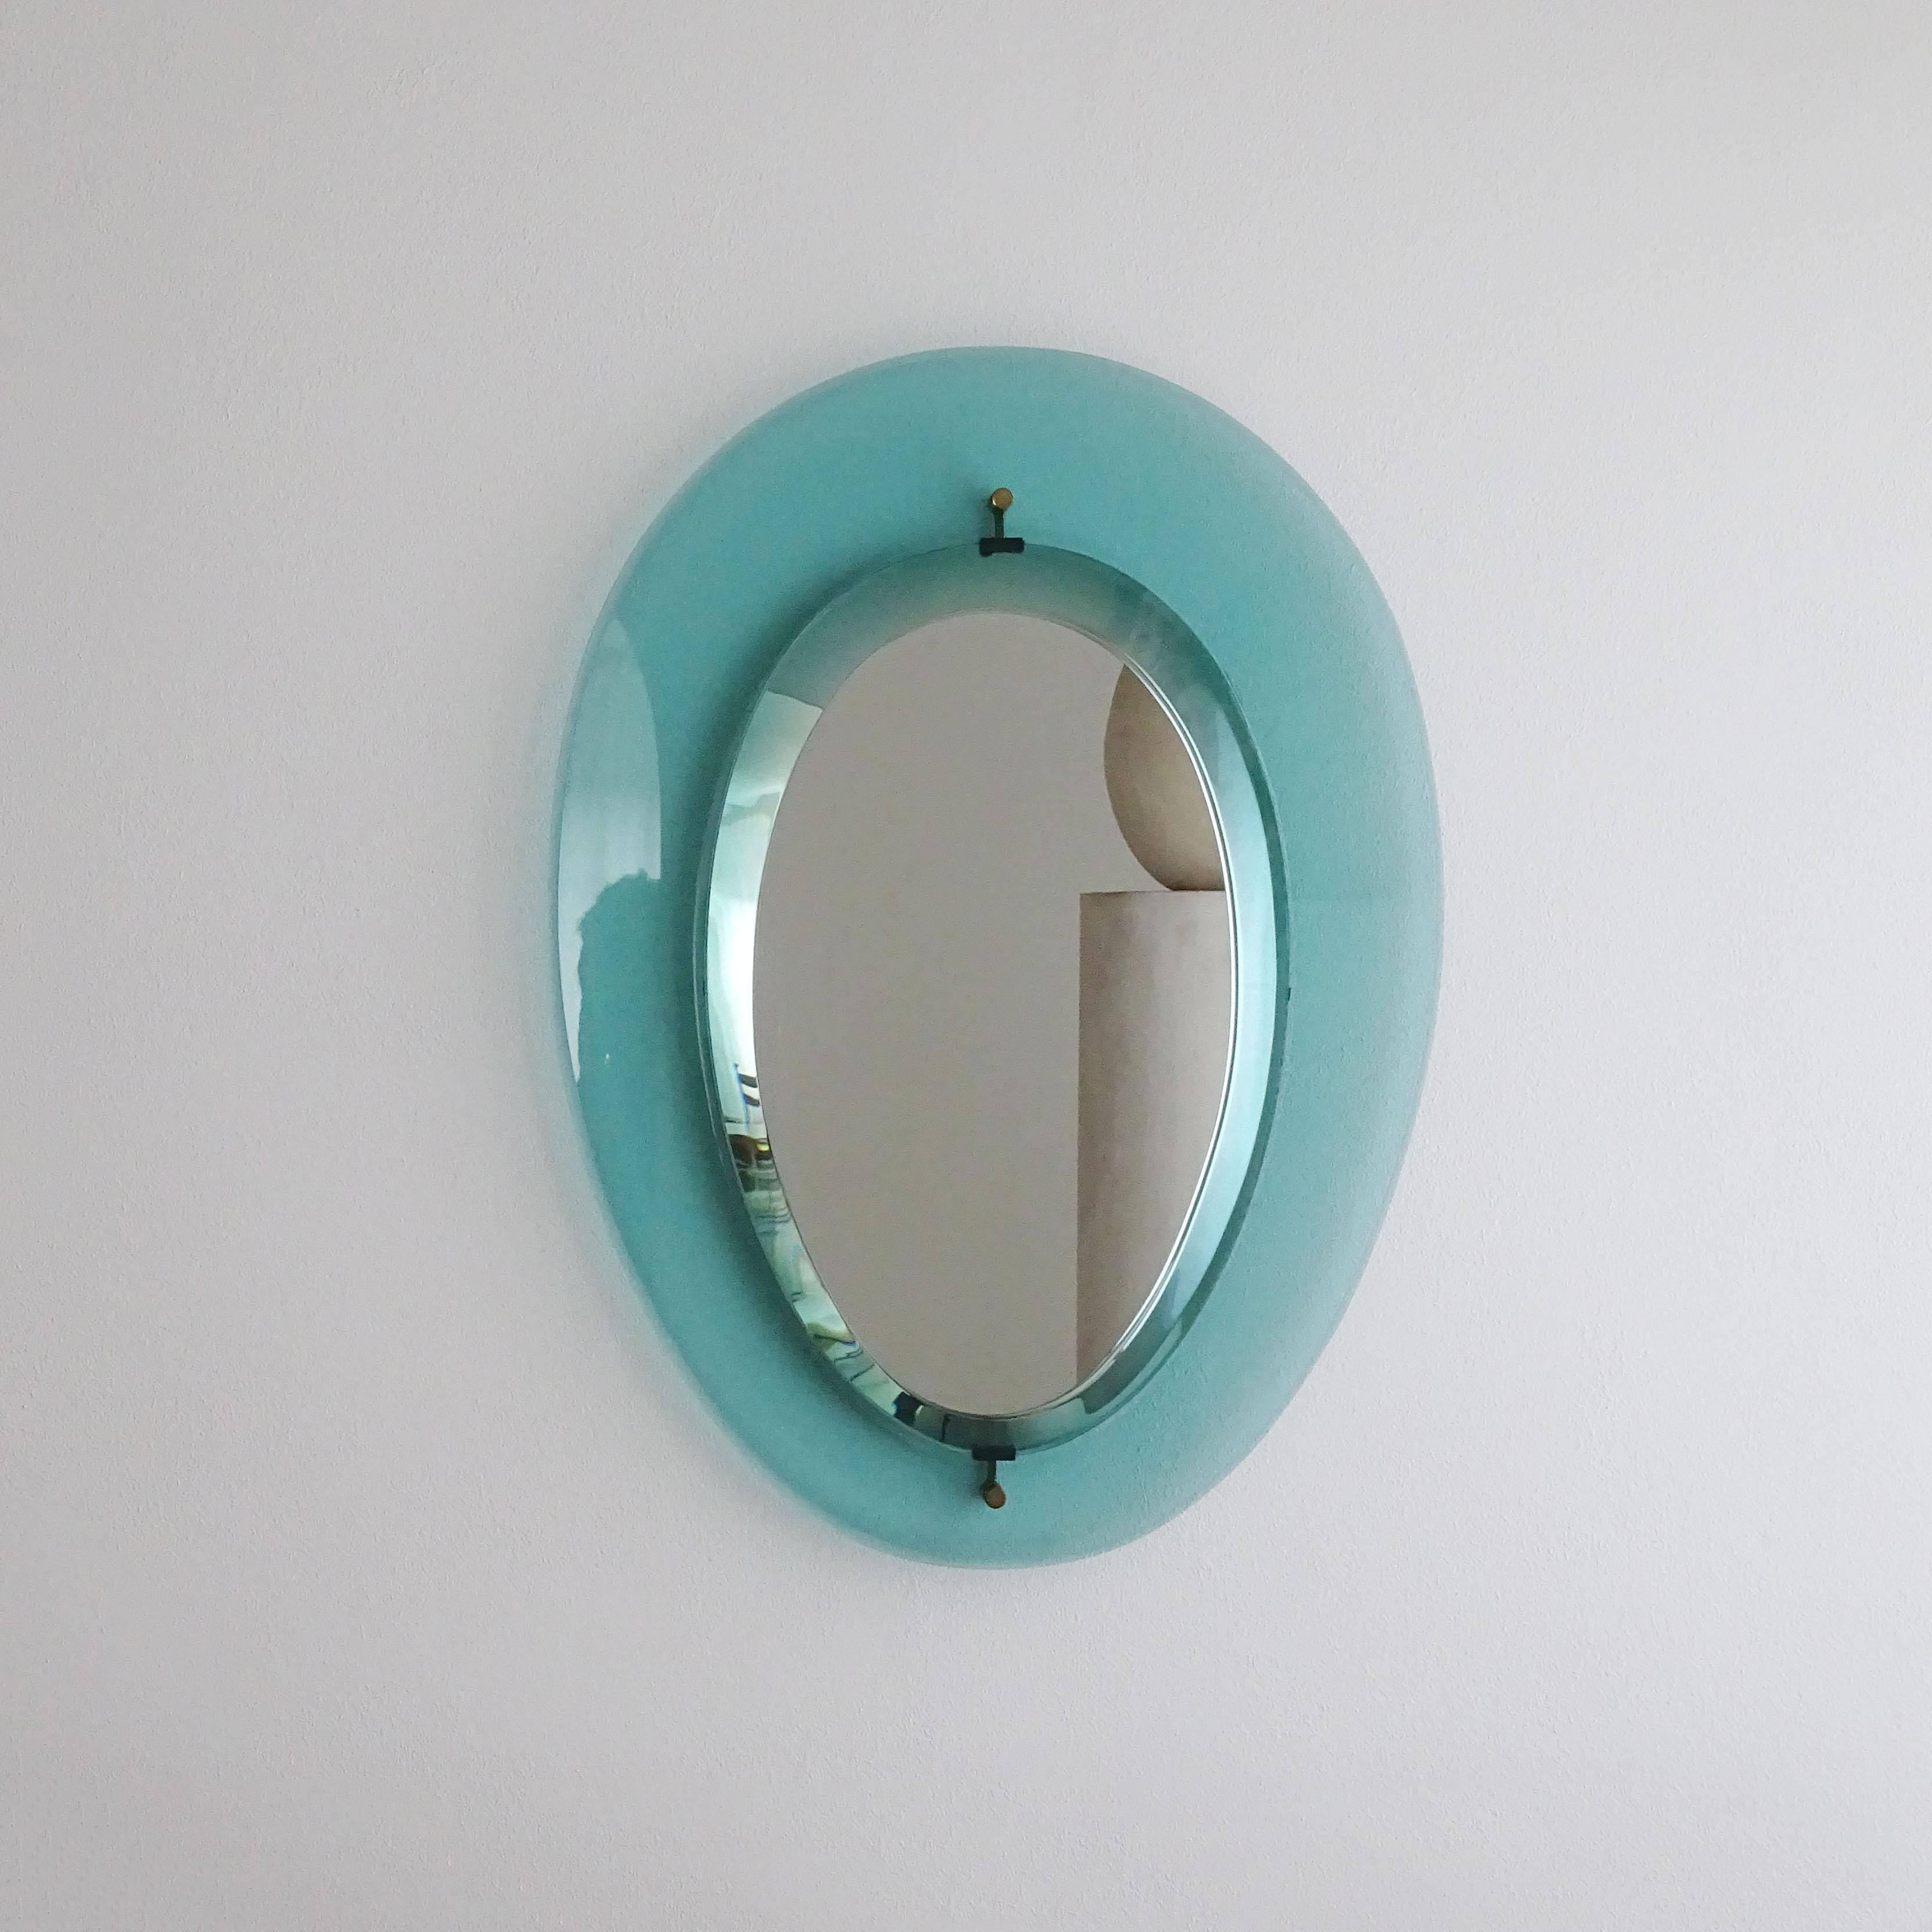 Splendid Max Ingrand wall mirror model 2085 for Fontana Arte, 
Italy 1960s
Reference: Quaderni Fontana Arte No.6 p.156.